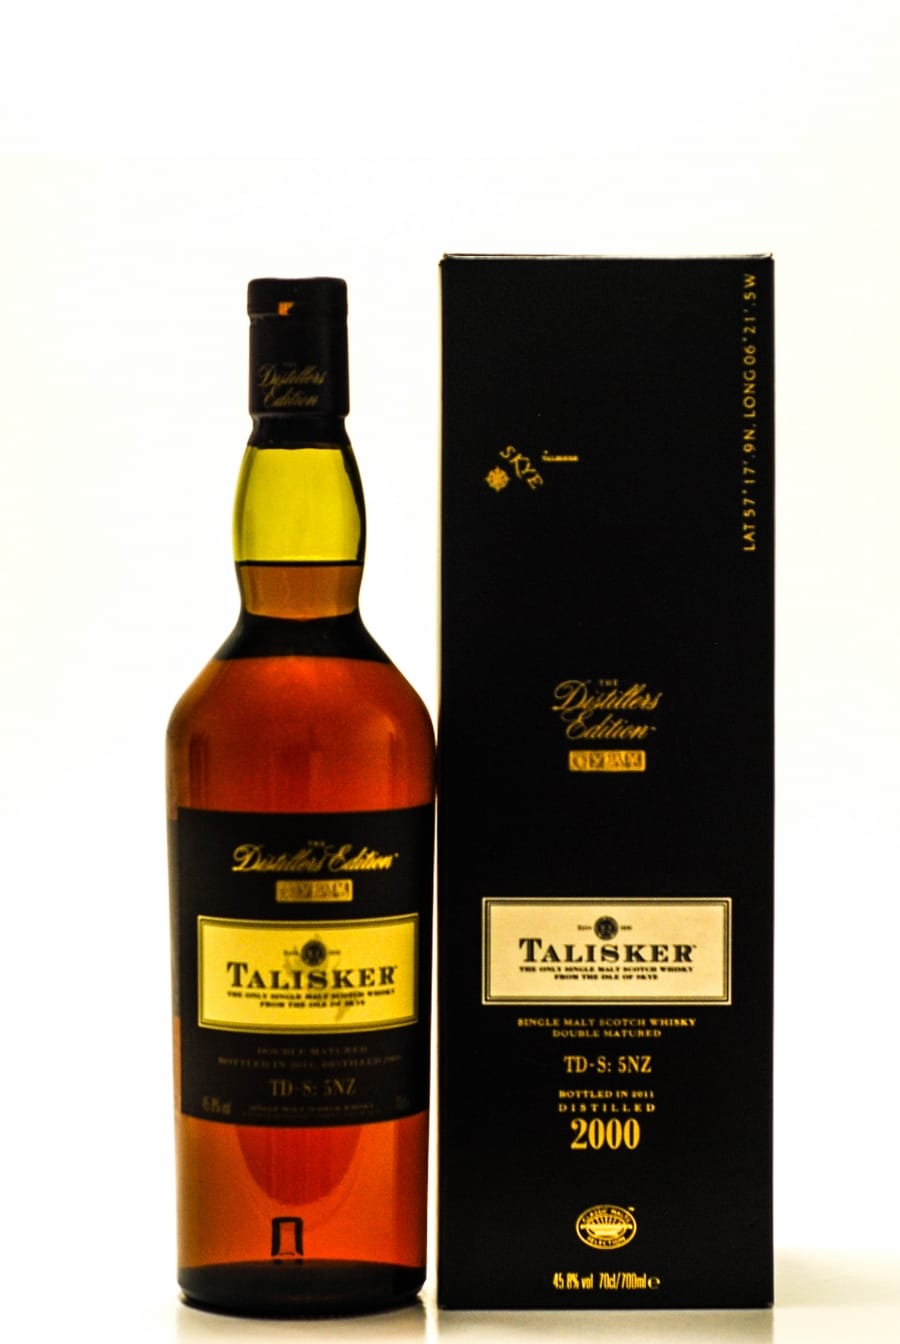 Talisker - Distillers Edition Vintage 2000 Amoroso Sherry Casks Finish Bottlecode: TD-S:5NZ 45,8% 2000 Perfect